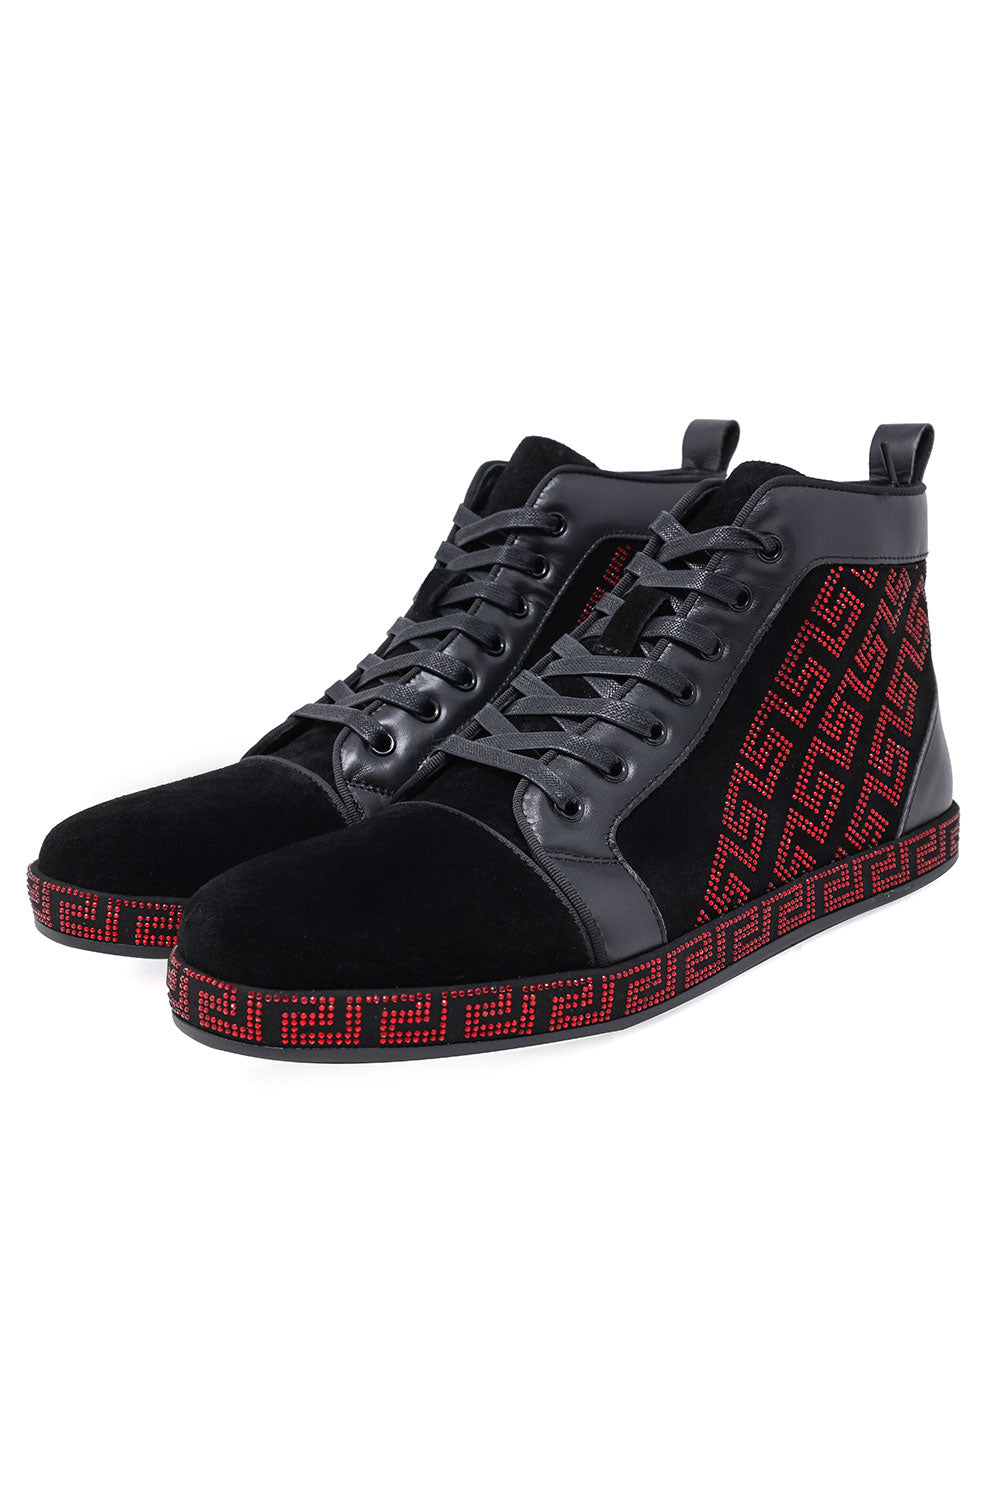 Barabas Men's Rhinestone Greek Pattern Design High Top Sneakers SH729  Black Red